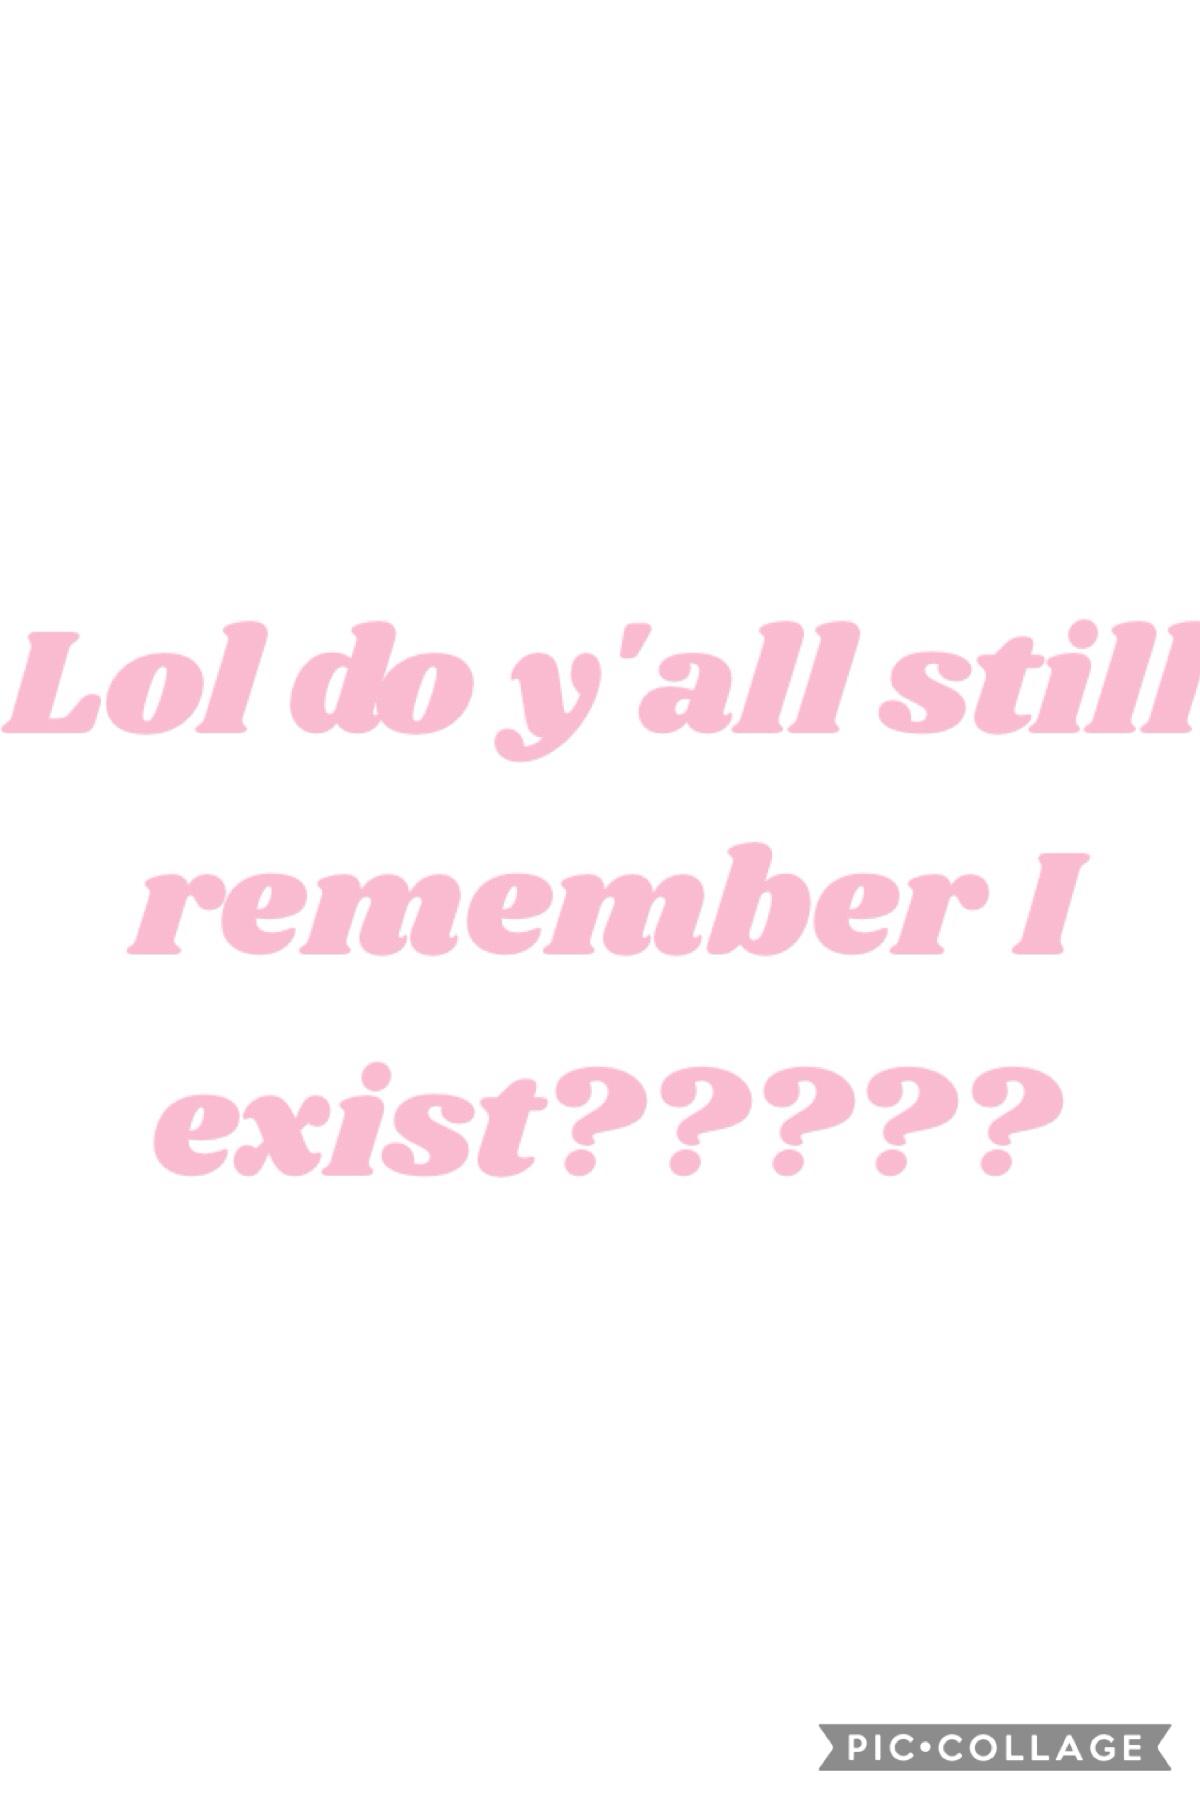 Lol do y'all still remember I exist?????